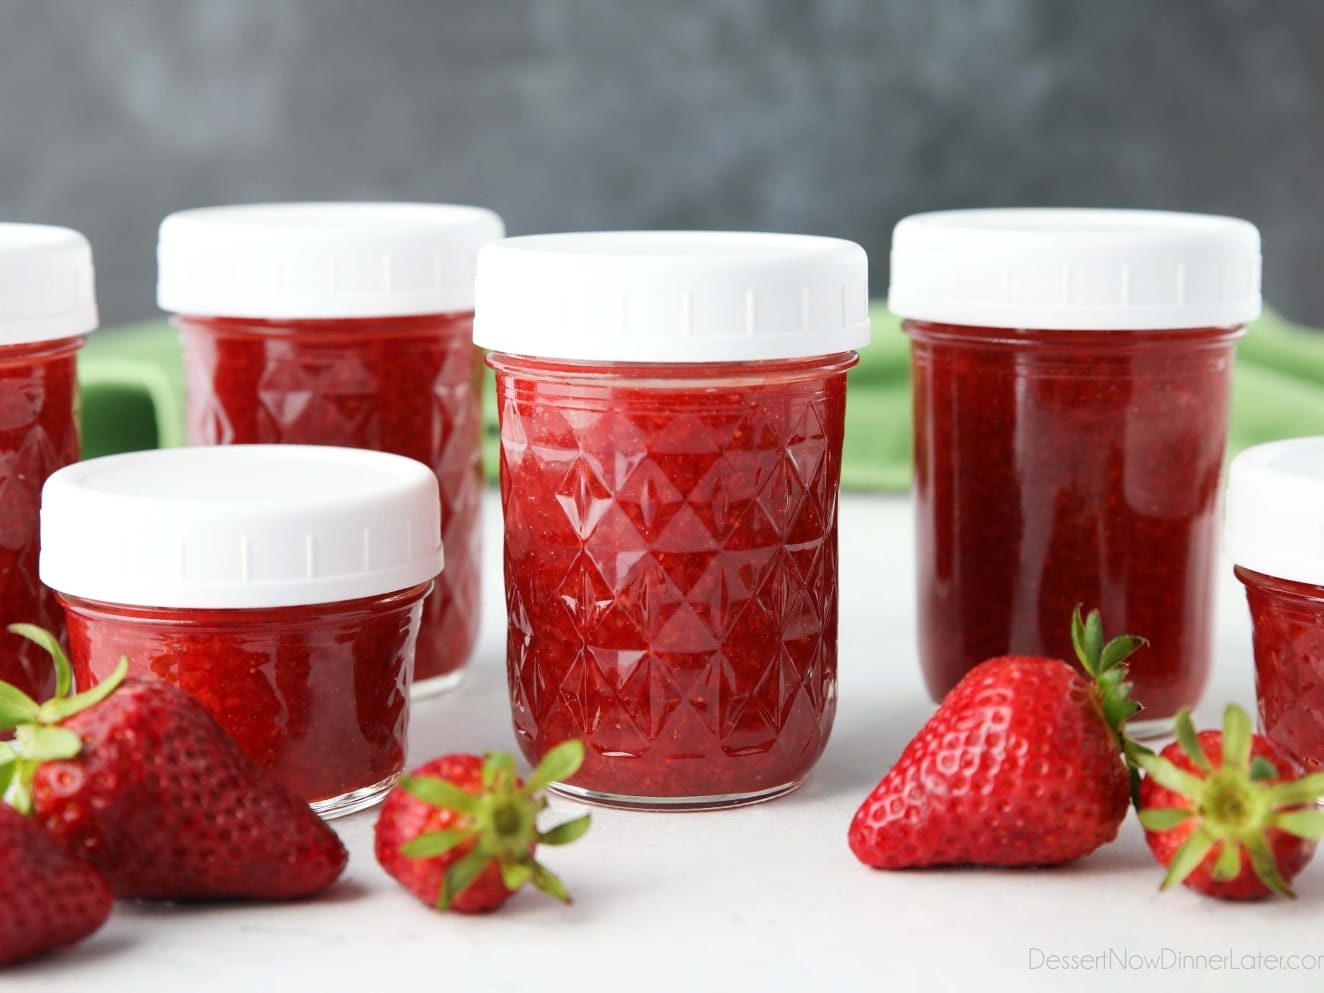 Today's Fabulous Finds: Strawberry Freezer Jam: Less Sugar vs. Full Sugar